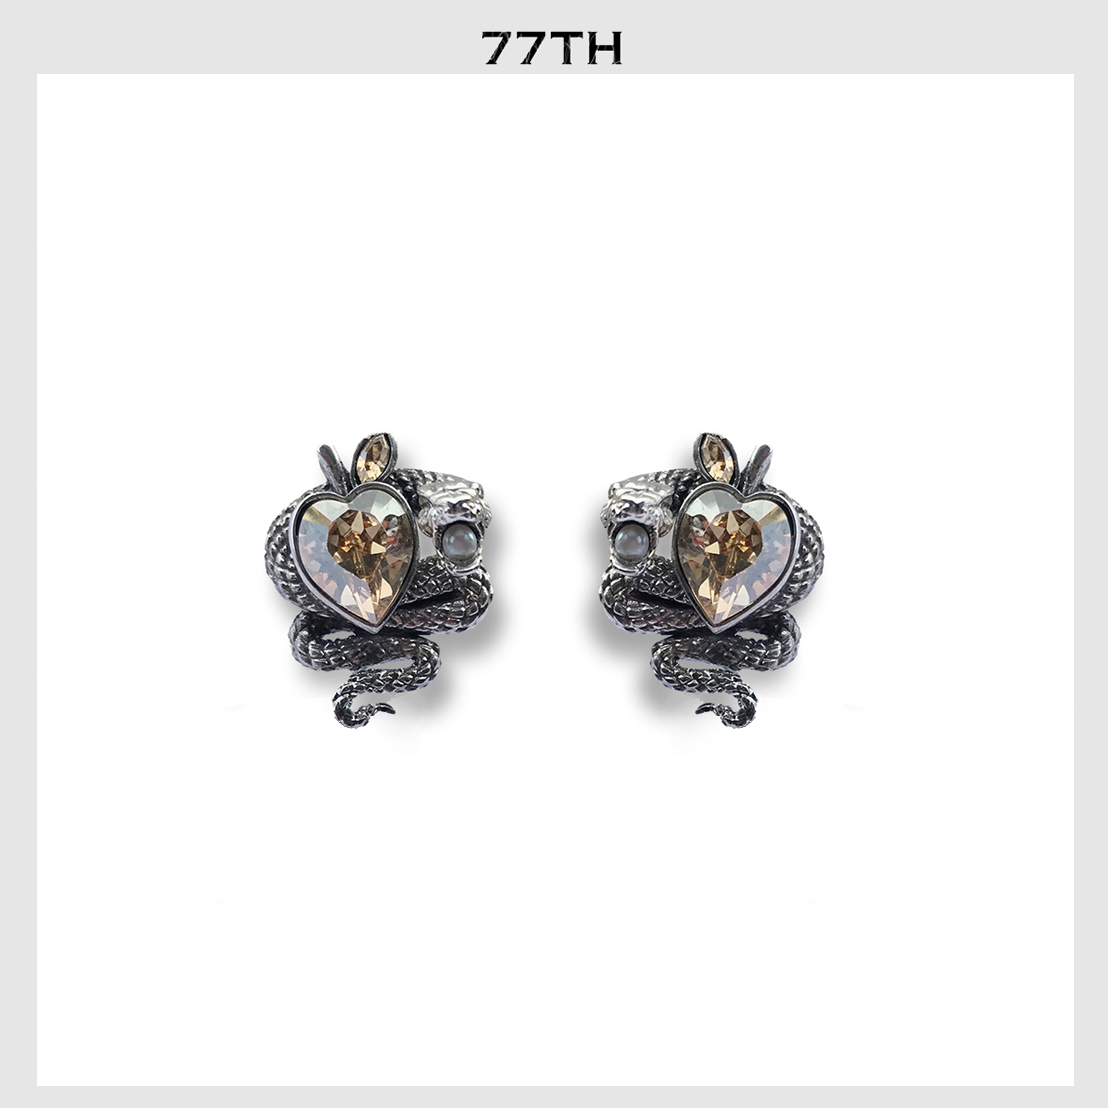 77th-sririta x 77th crystals from Swarovski collection serpent earrings champaign  crystals silver ต่างหู ศรีริต้า x 77th คริสตัลสวรอฟสกี้  หยดน้ำ สีเงิน